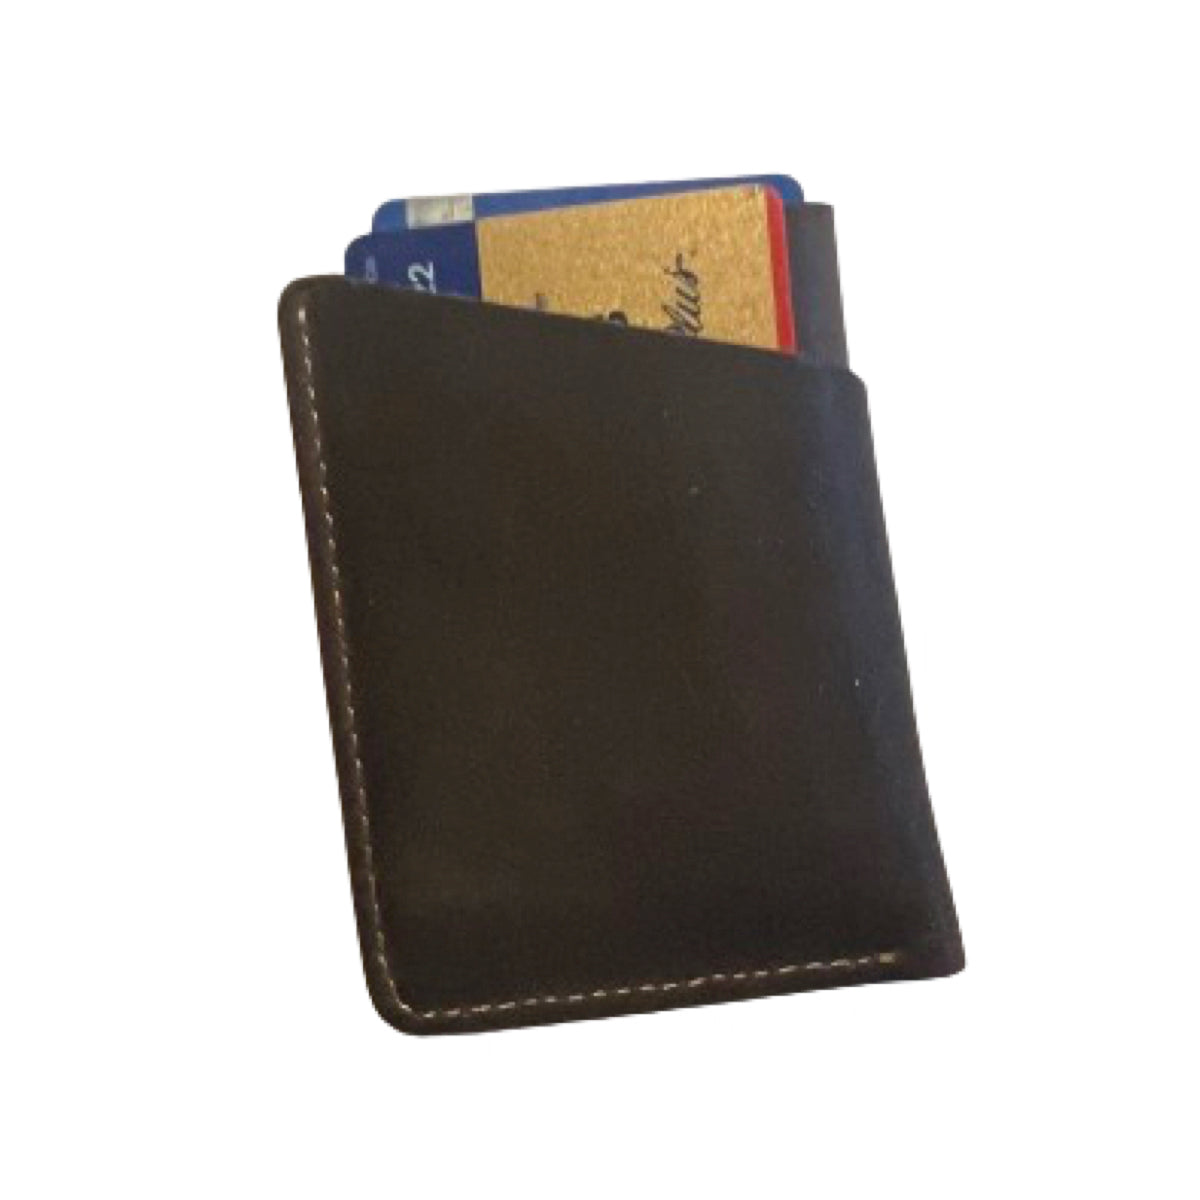 BANNED Slim Card & Cash Leather Wallet